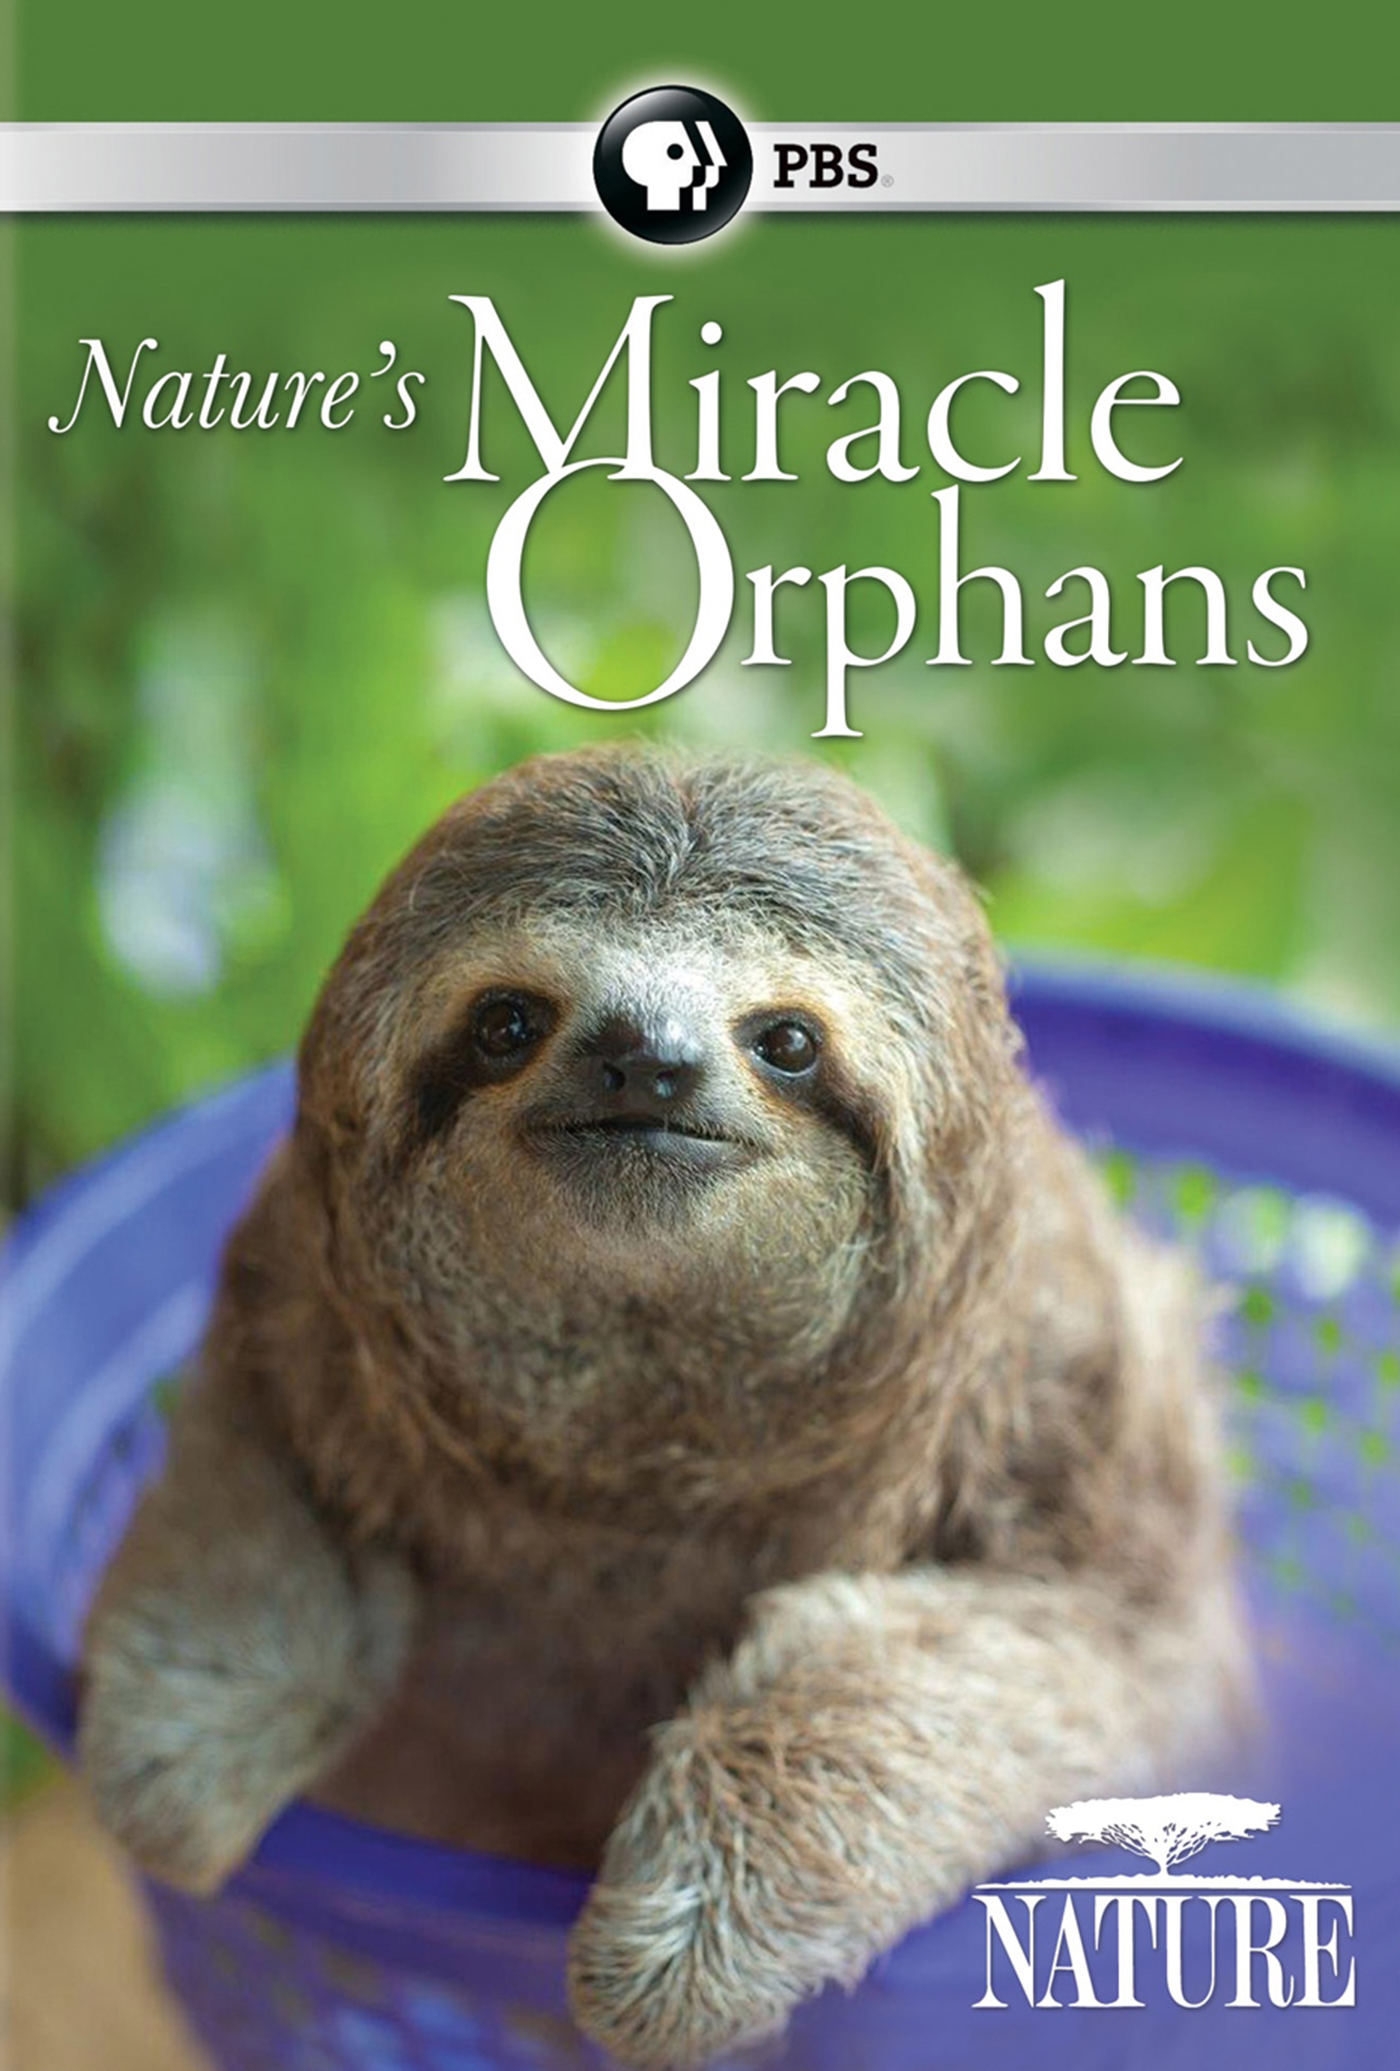 Nature's Miracle Orphans  'Nature's Miracle Orphans' Animated